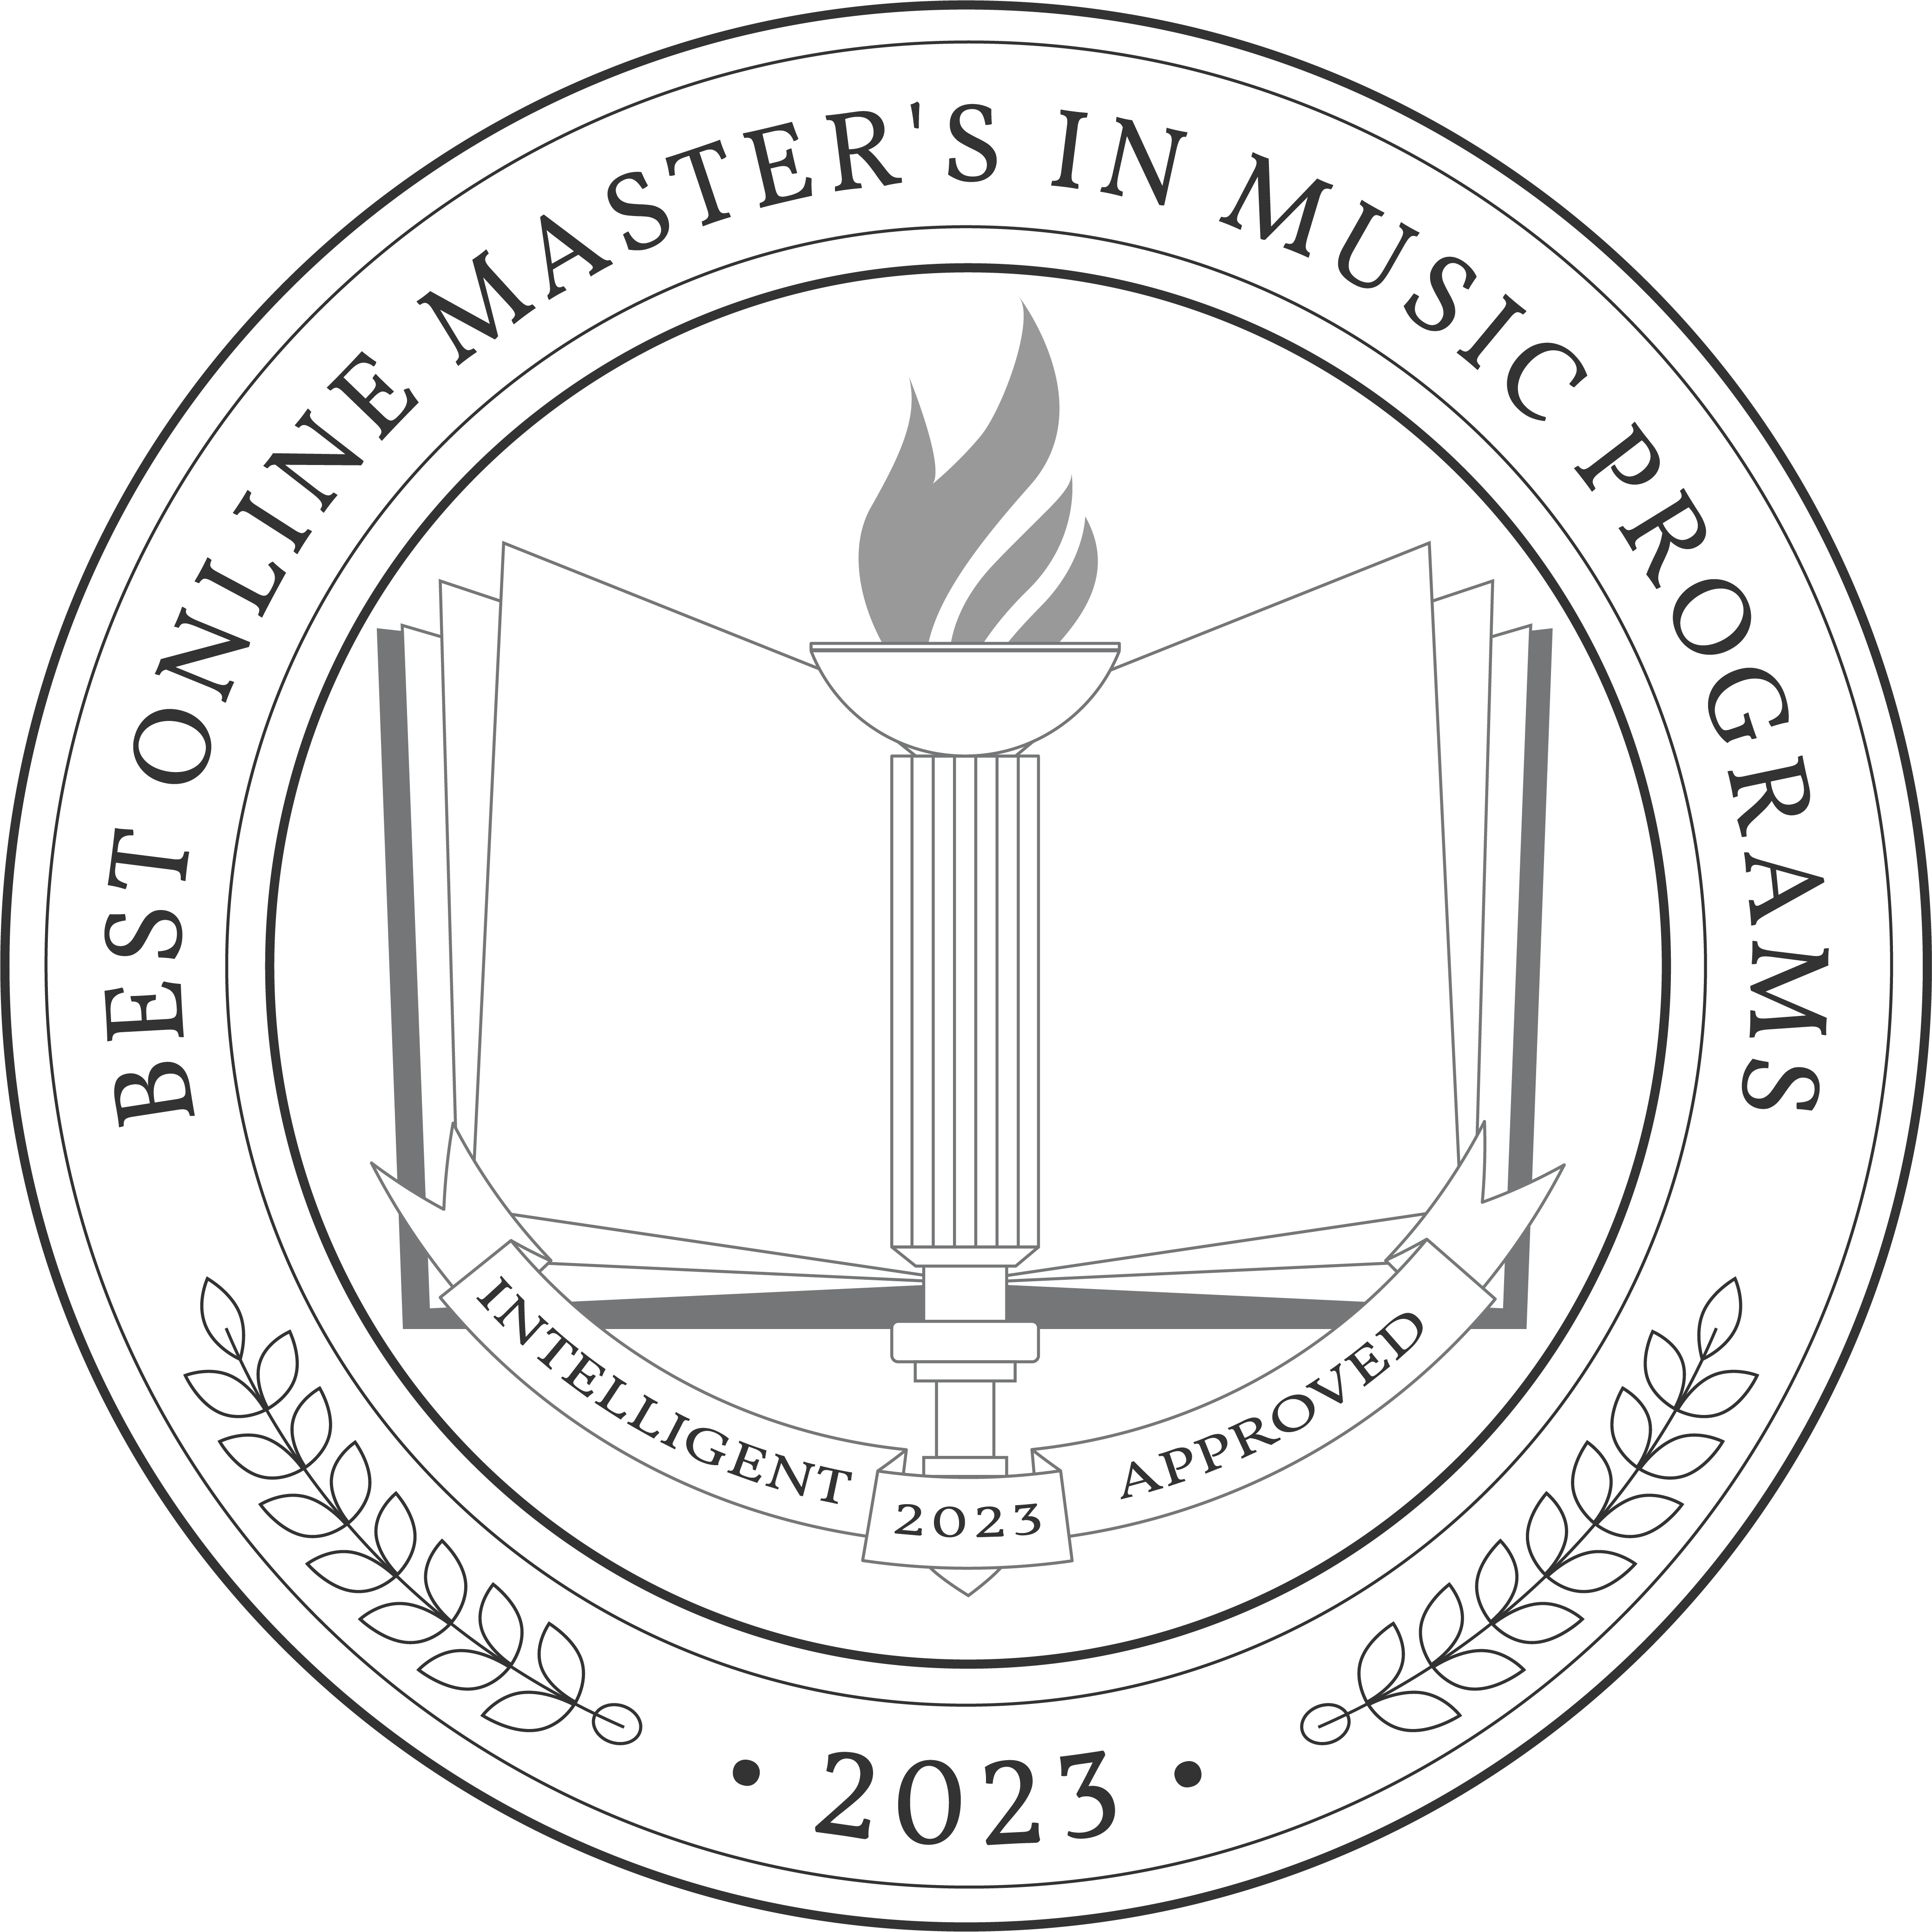 Best Online Master's in Music Programs badge